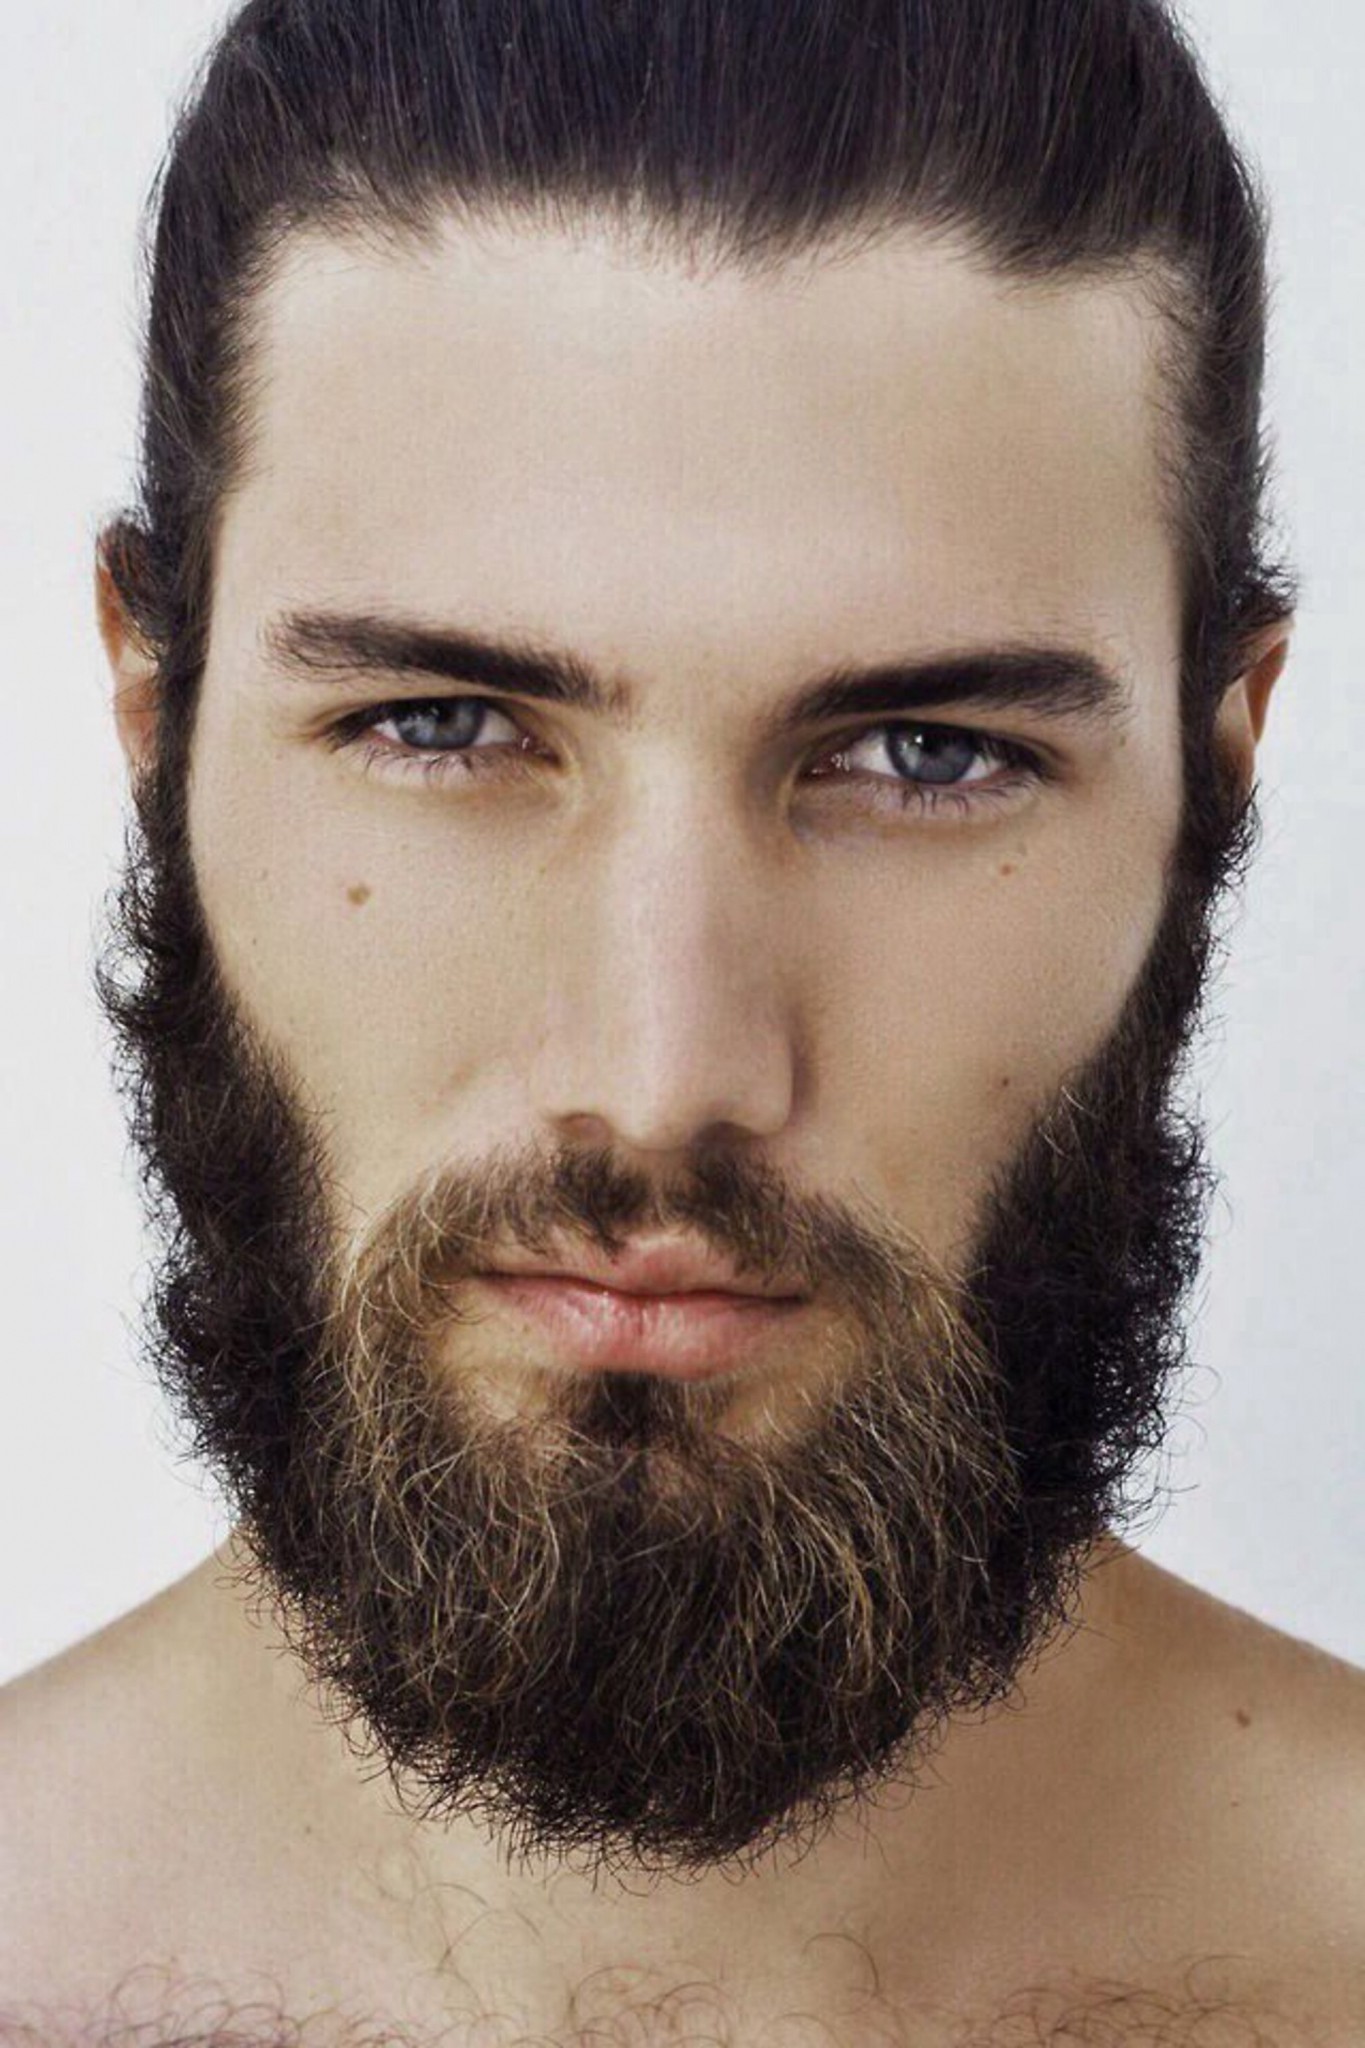 97 Full Beard Styles: Choose the Beard You’d Like to Grow in 2021